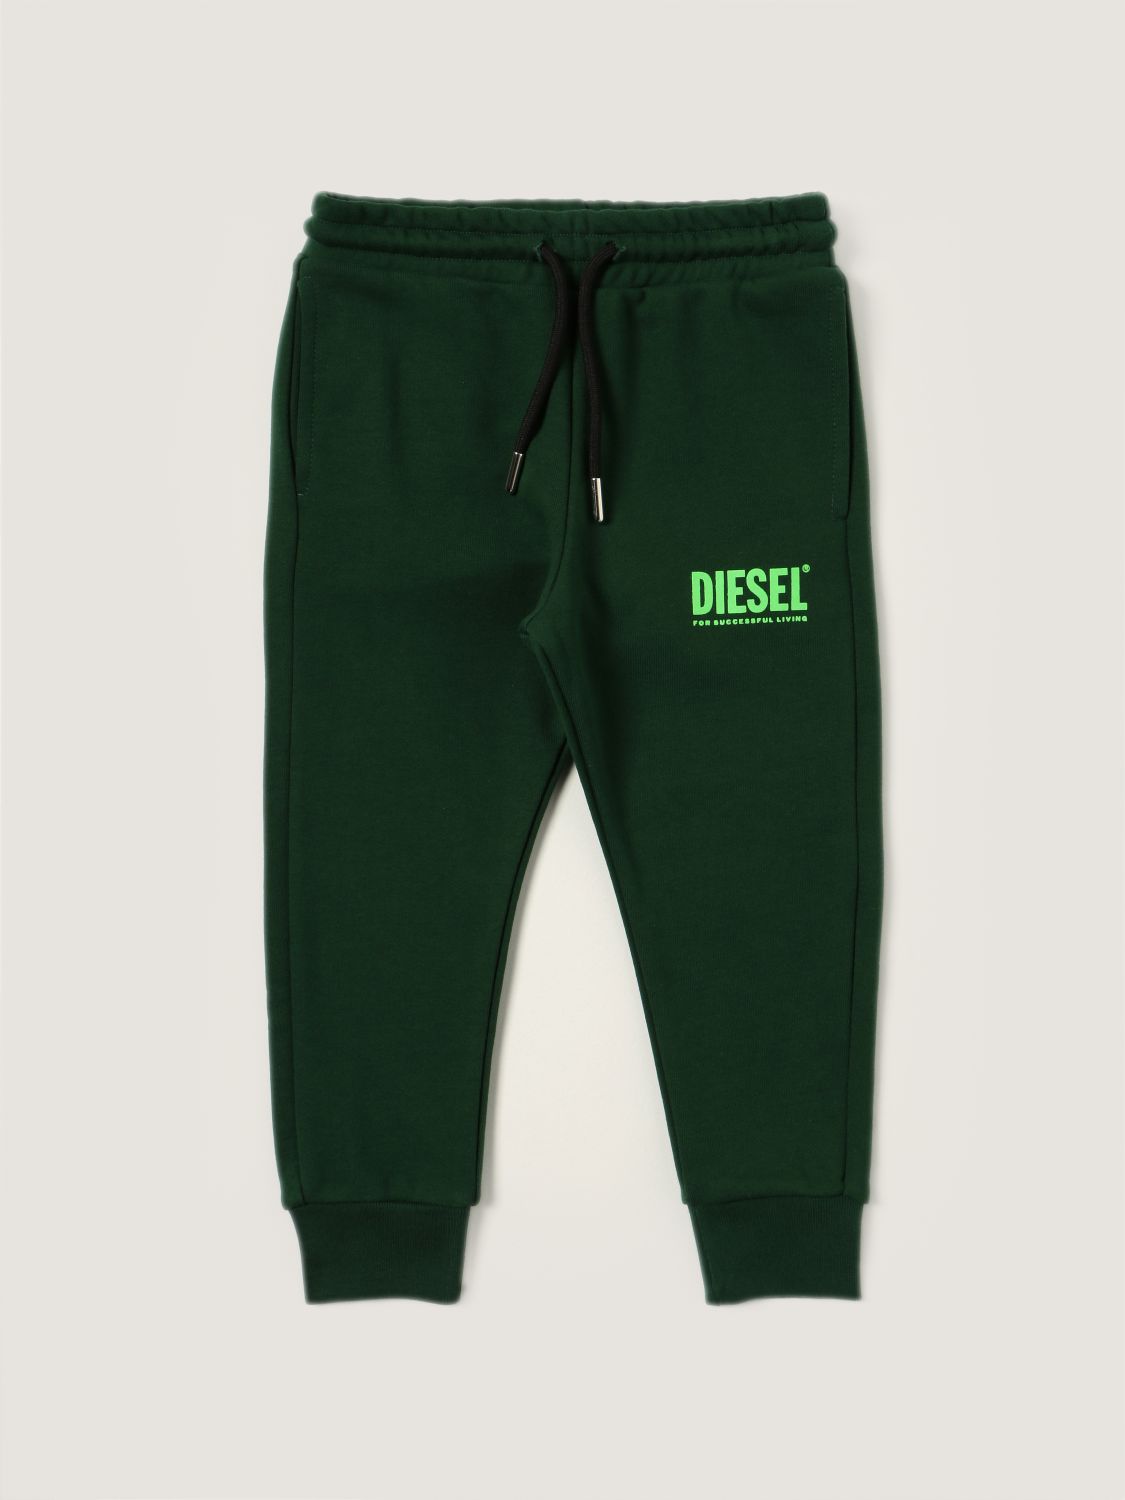 Hose Diesel: Hose kinder Diesel grün 1